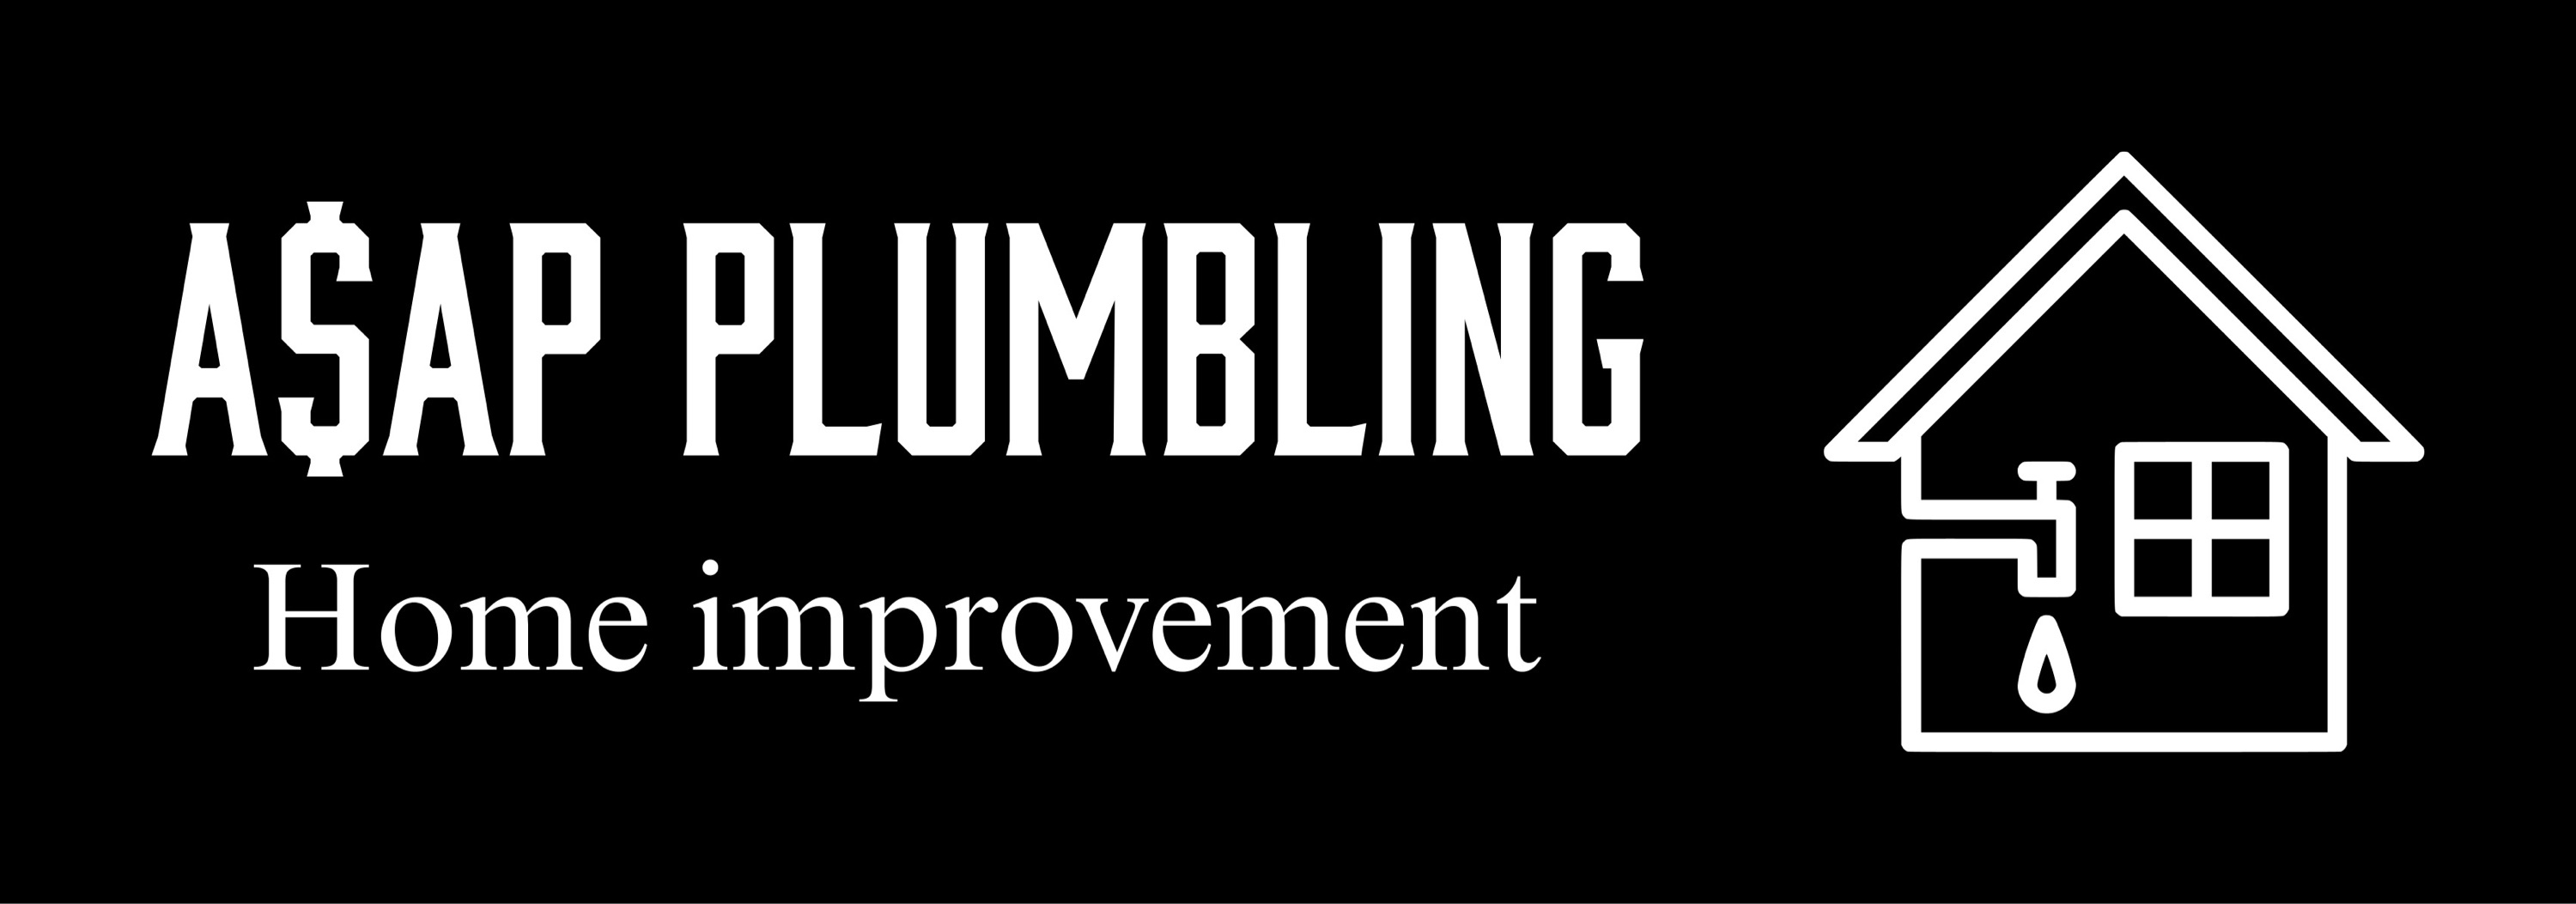 ASAP Plumbing And Home Improvement Logo